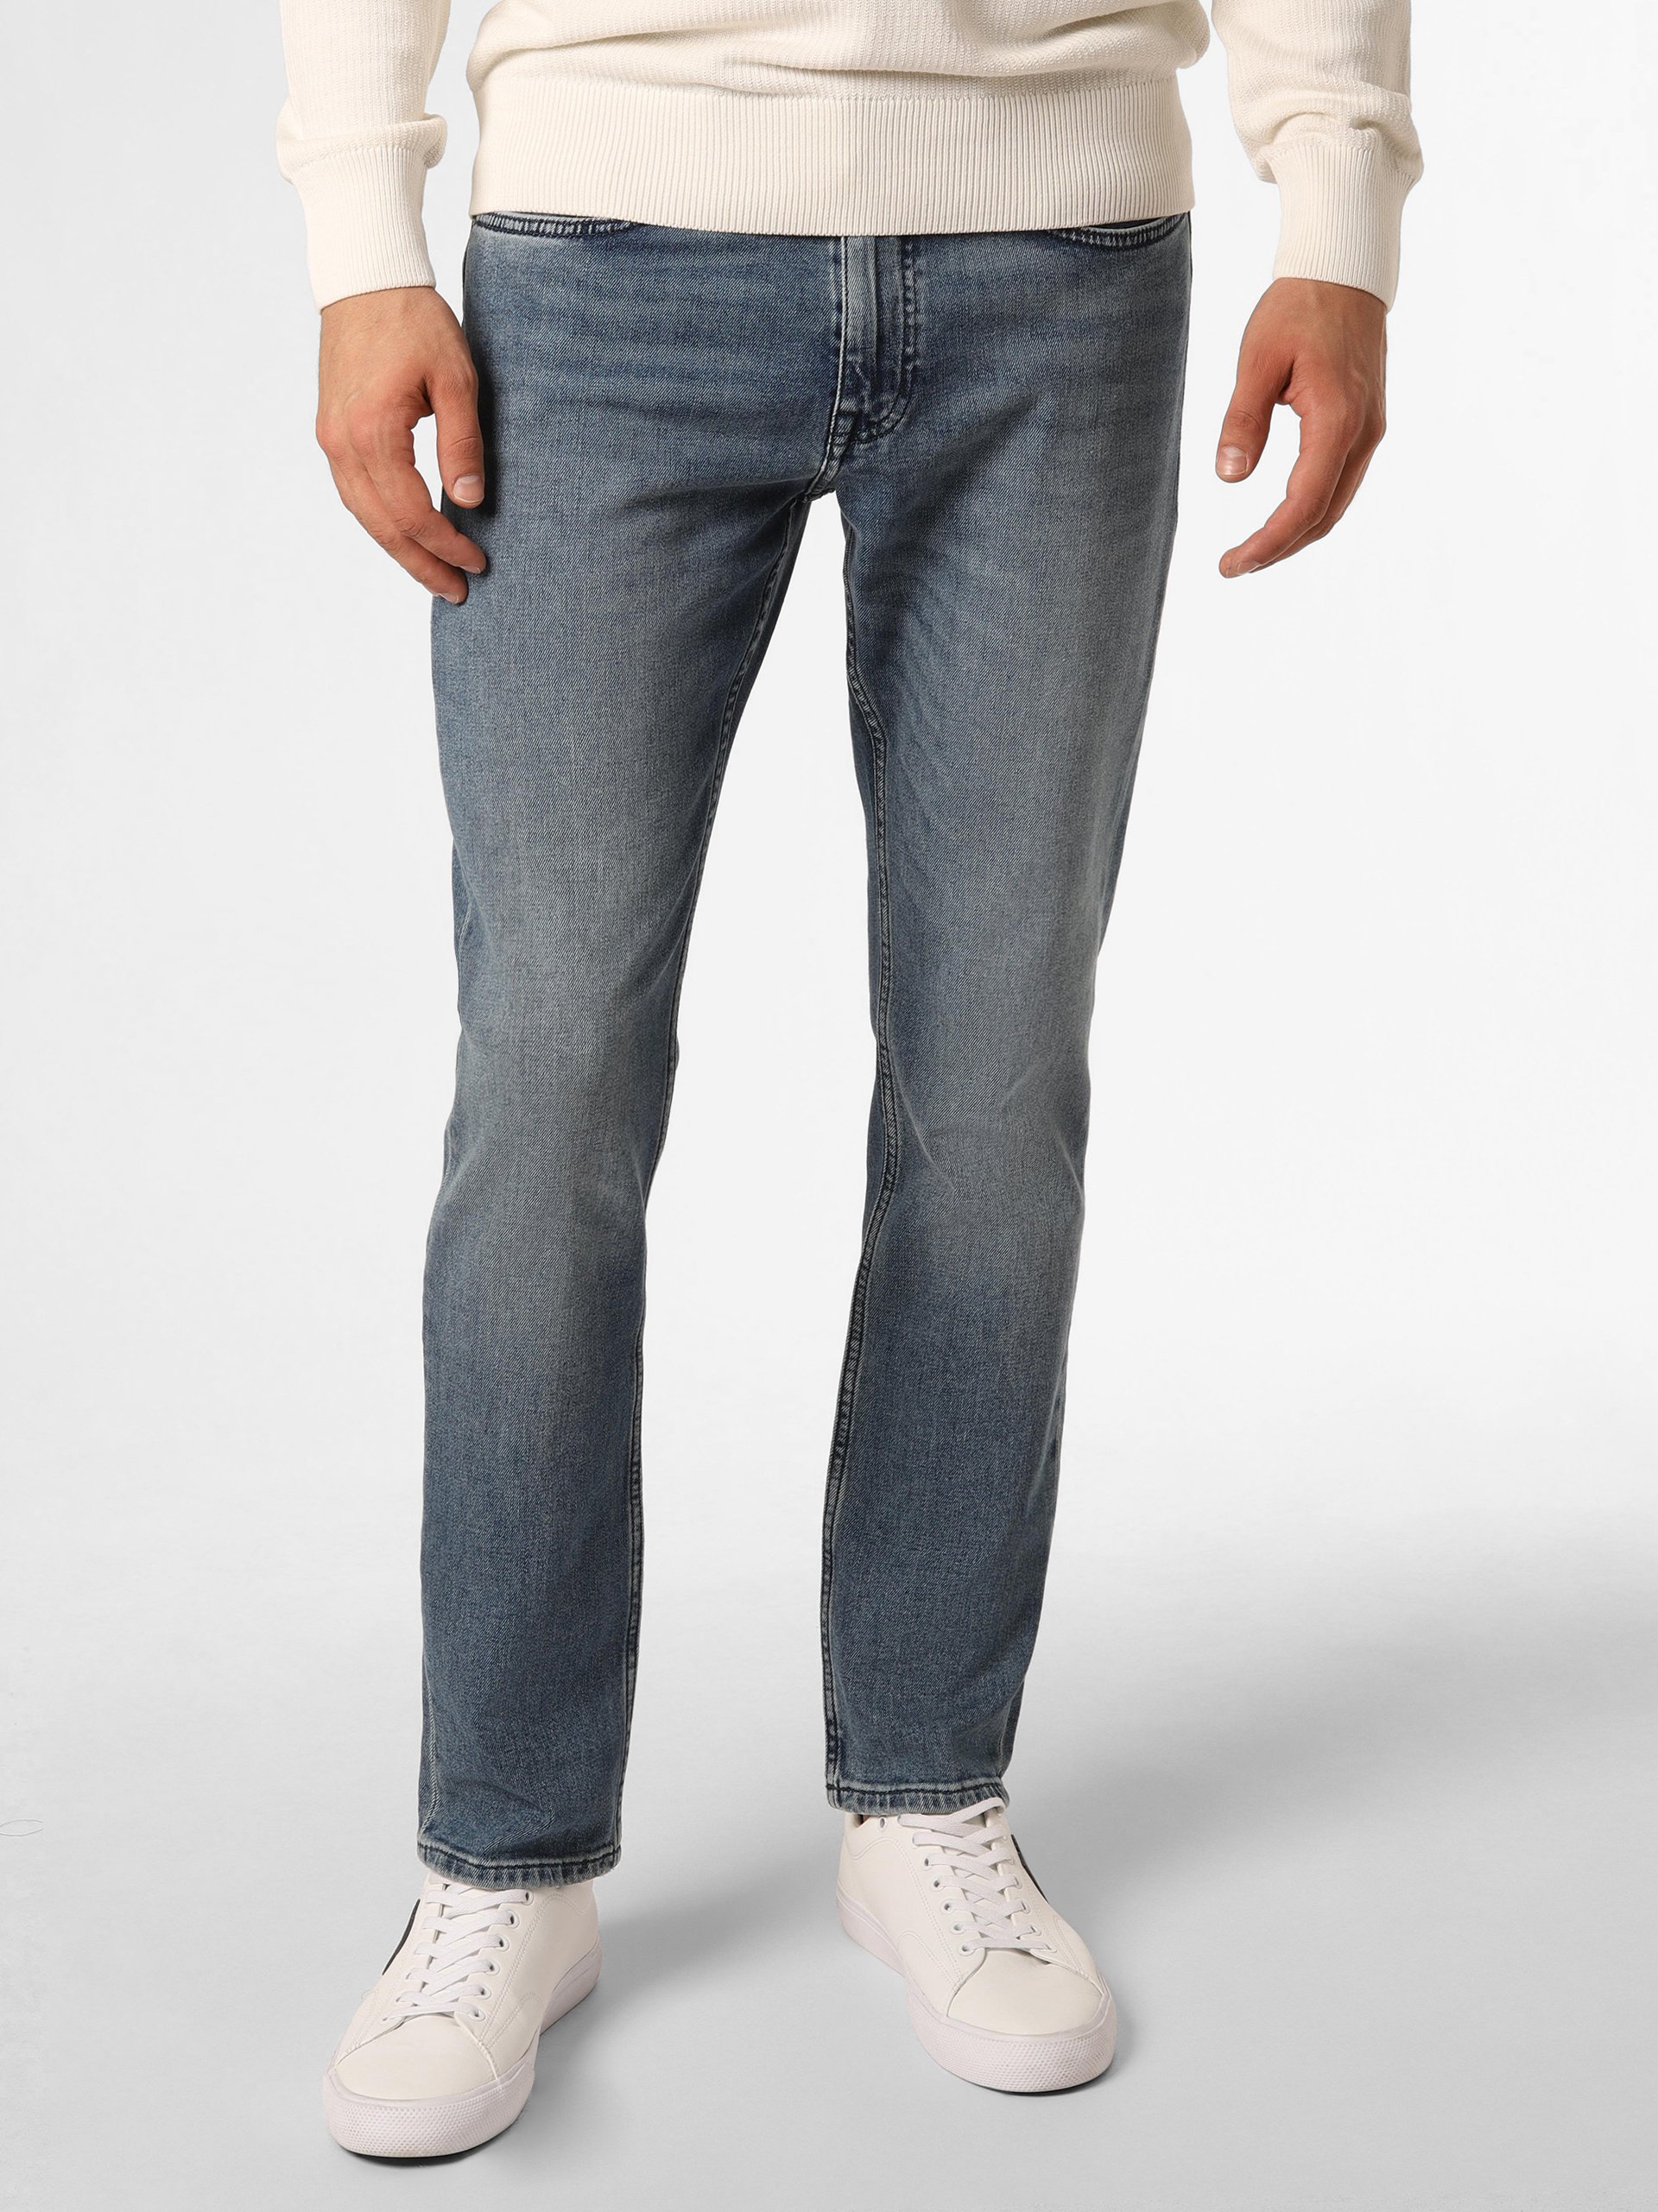 BOSS Orange Herren Jeans - Delaware online kaufen | Stretchjeans